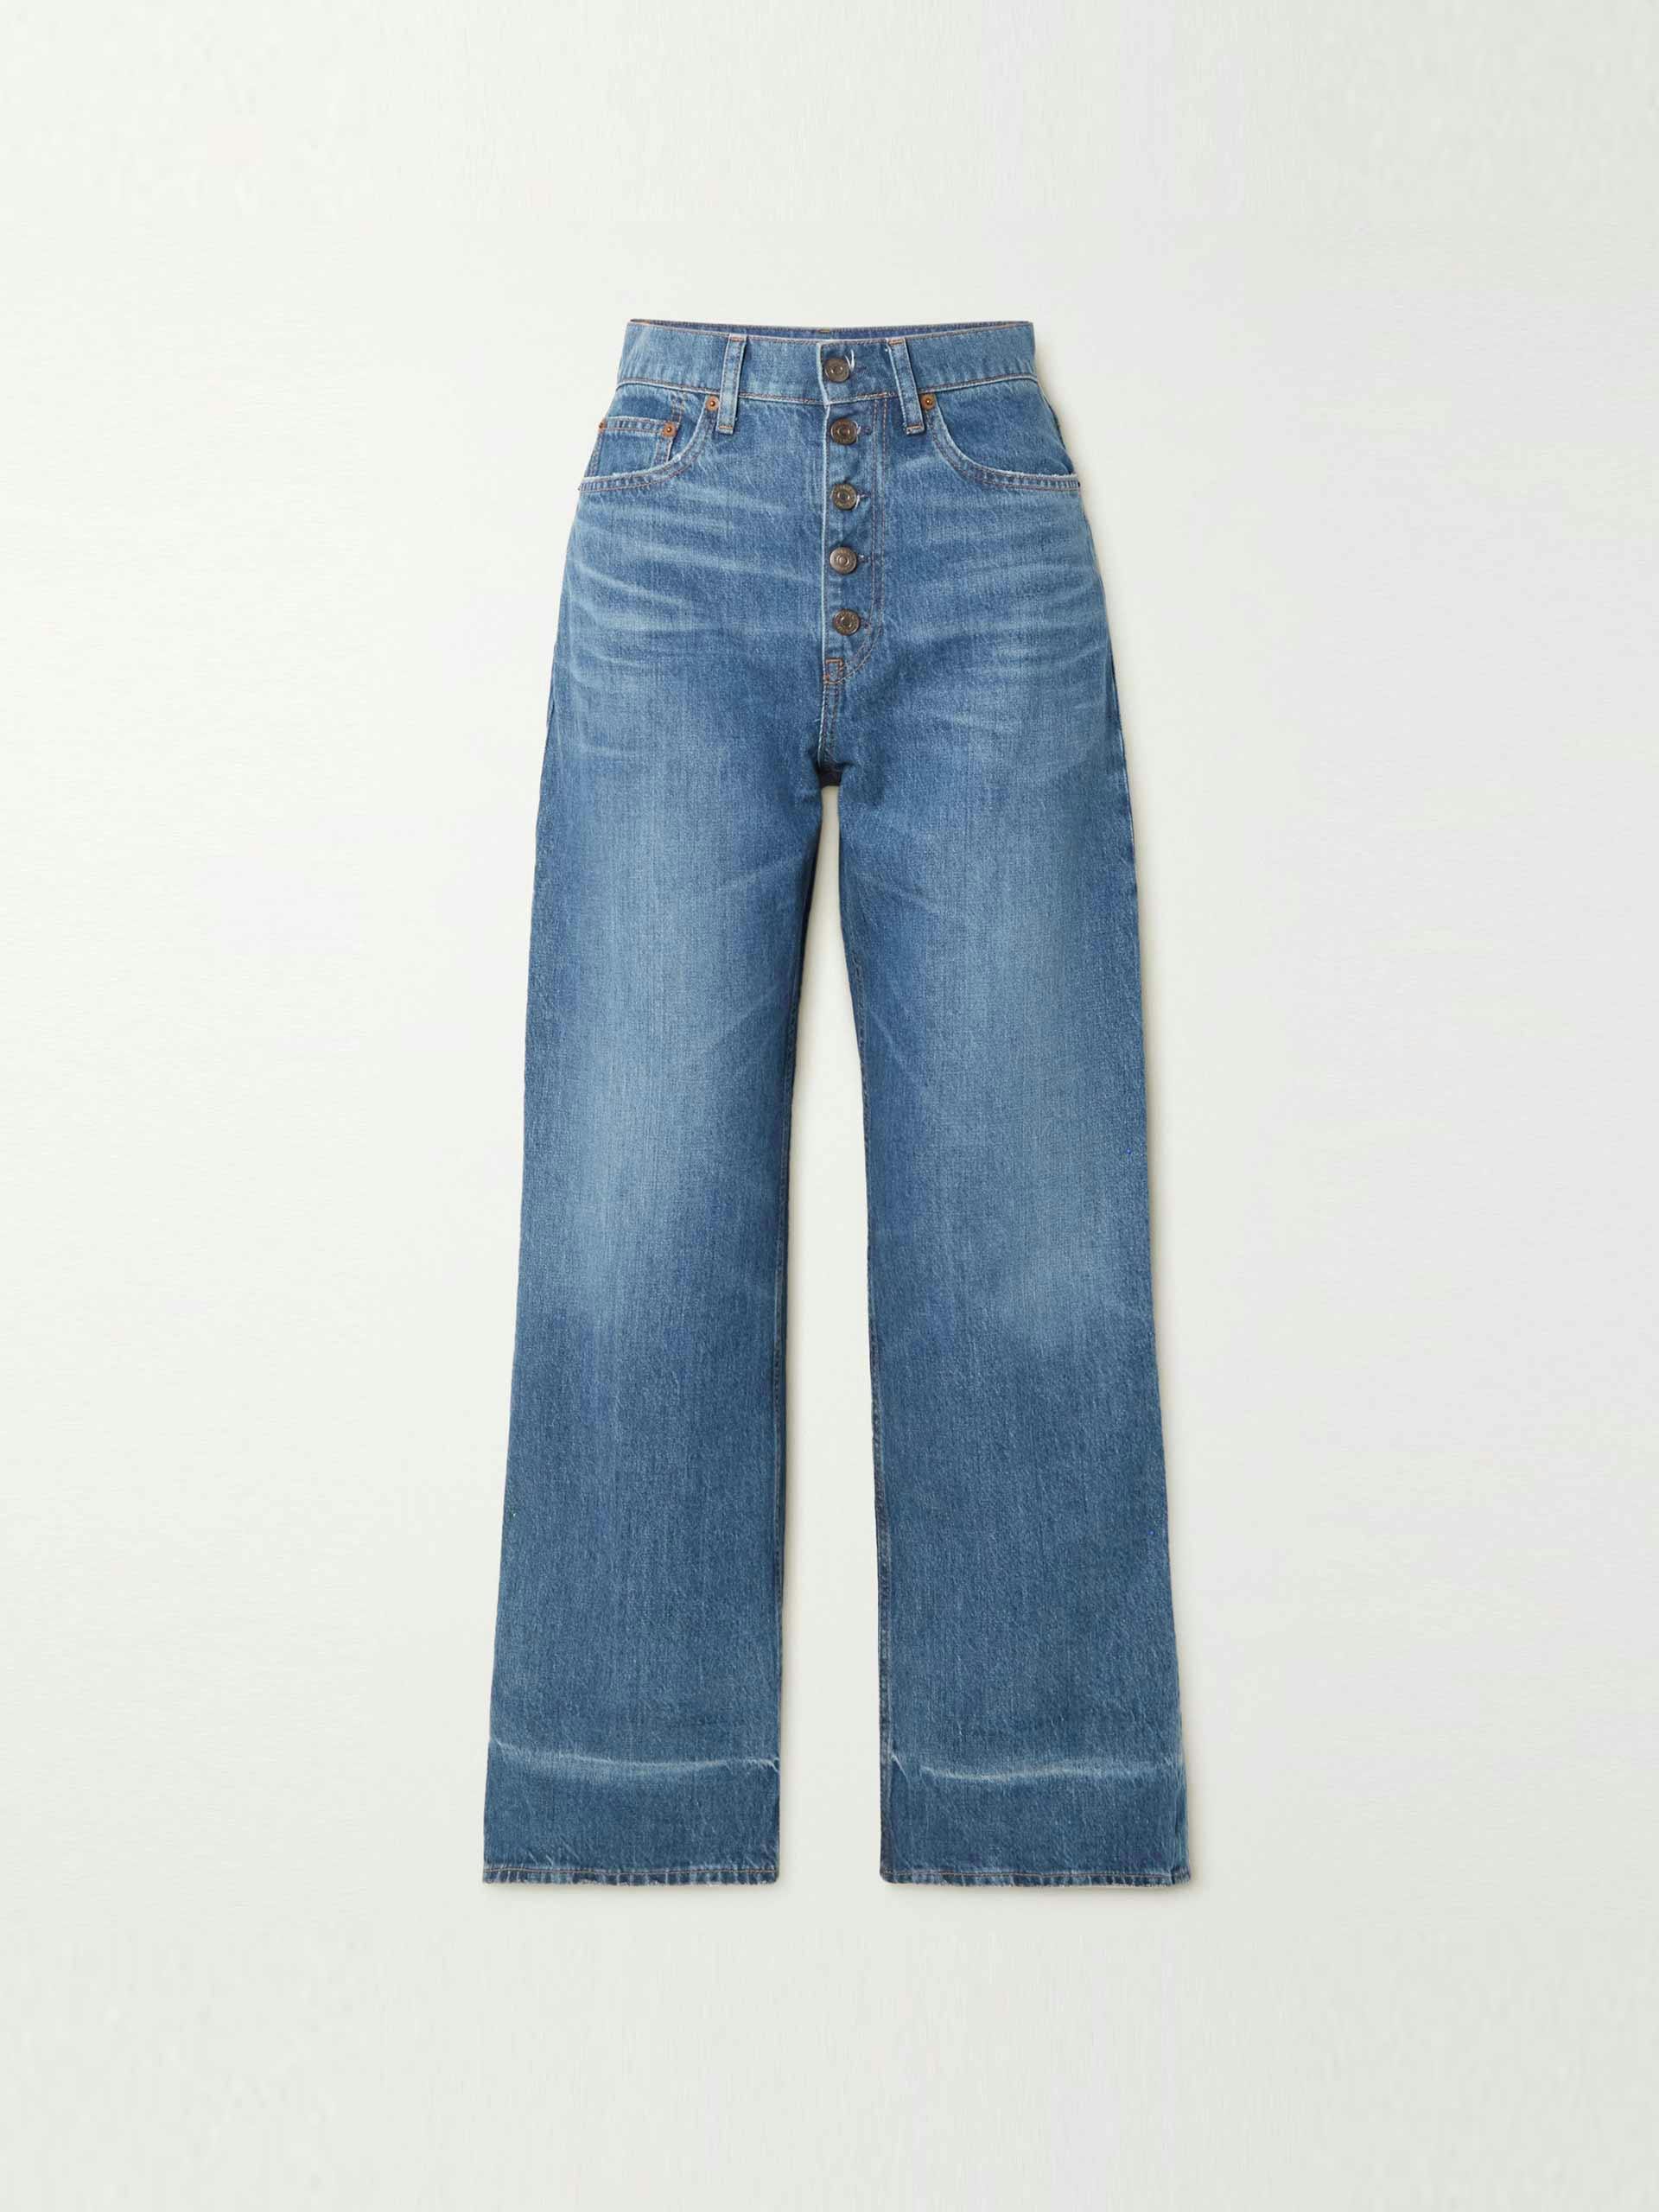 Cropped striaght leg jeans